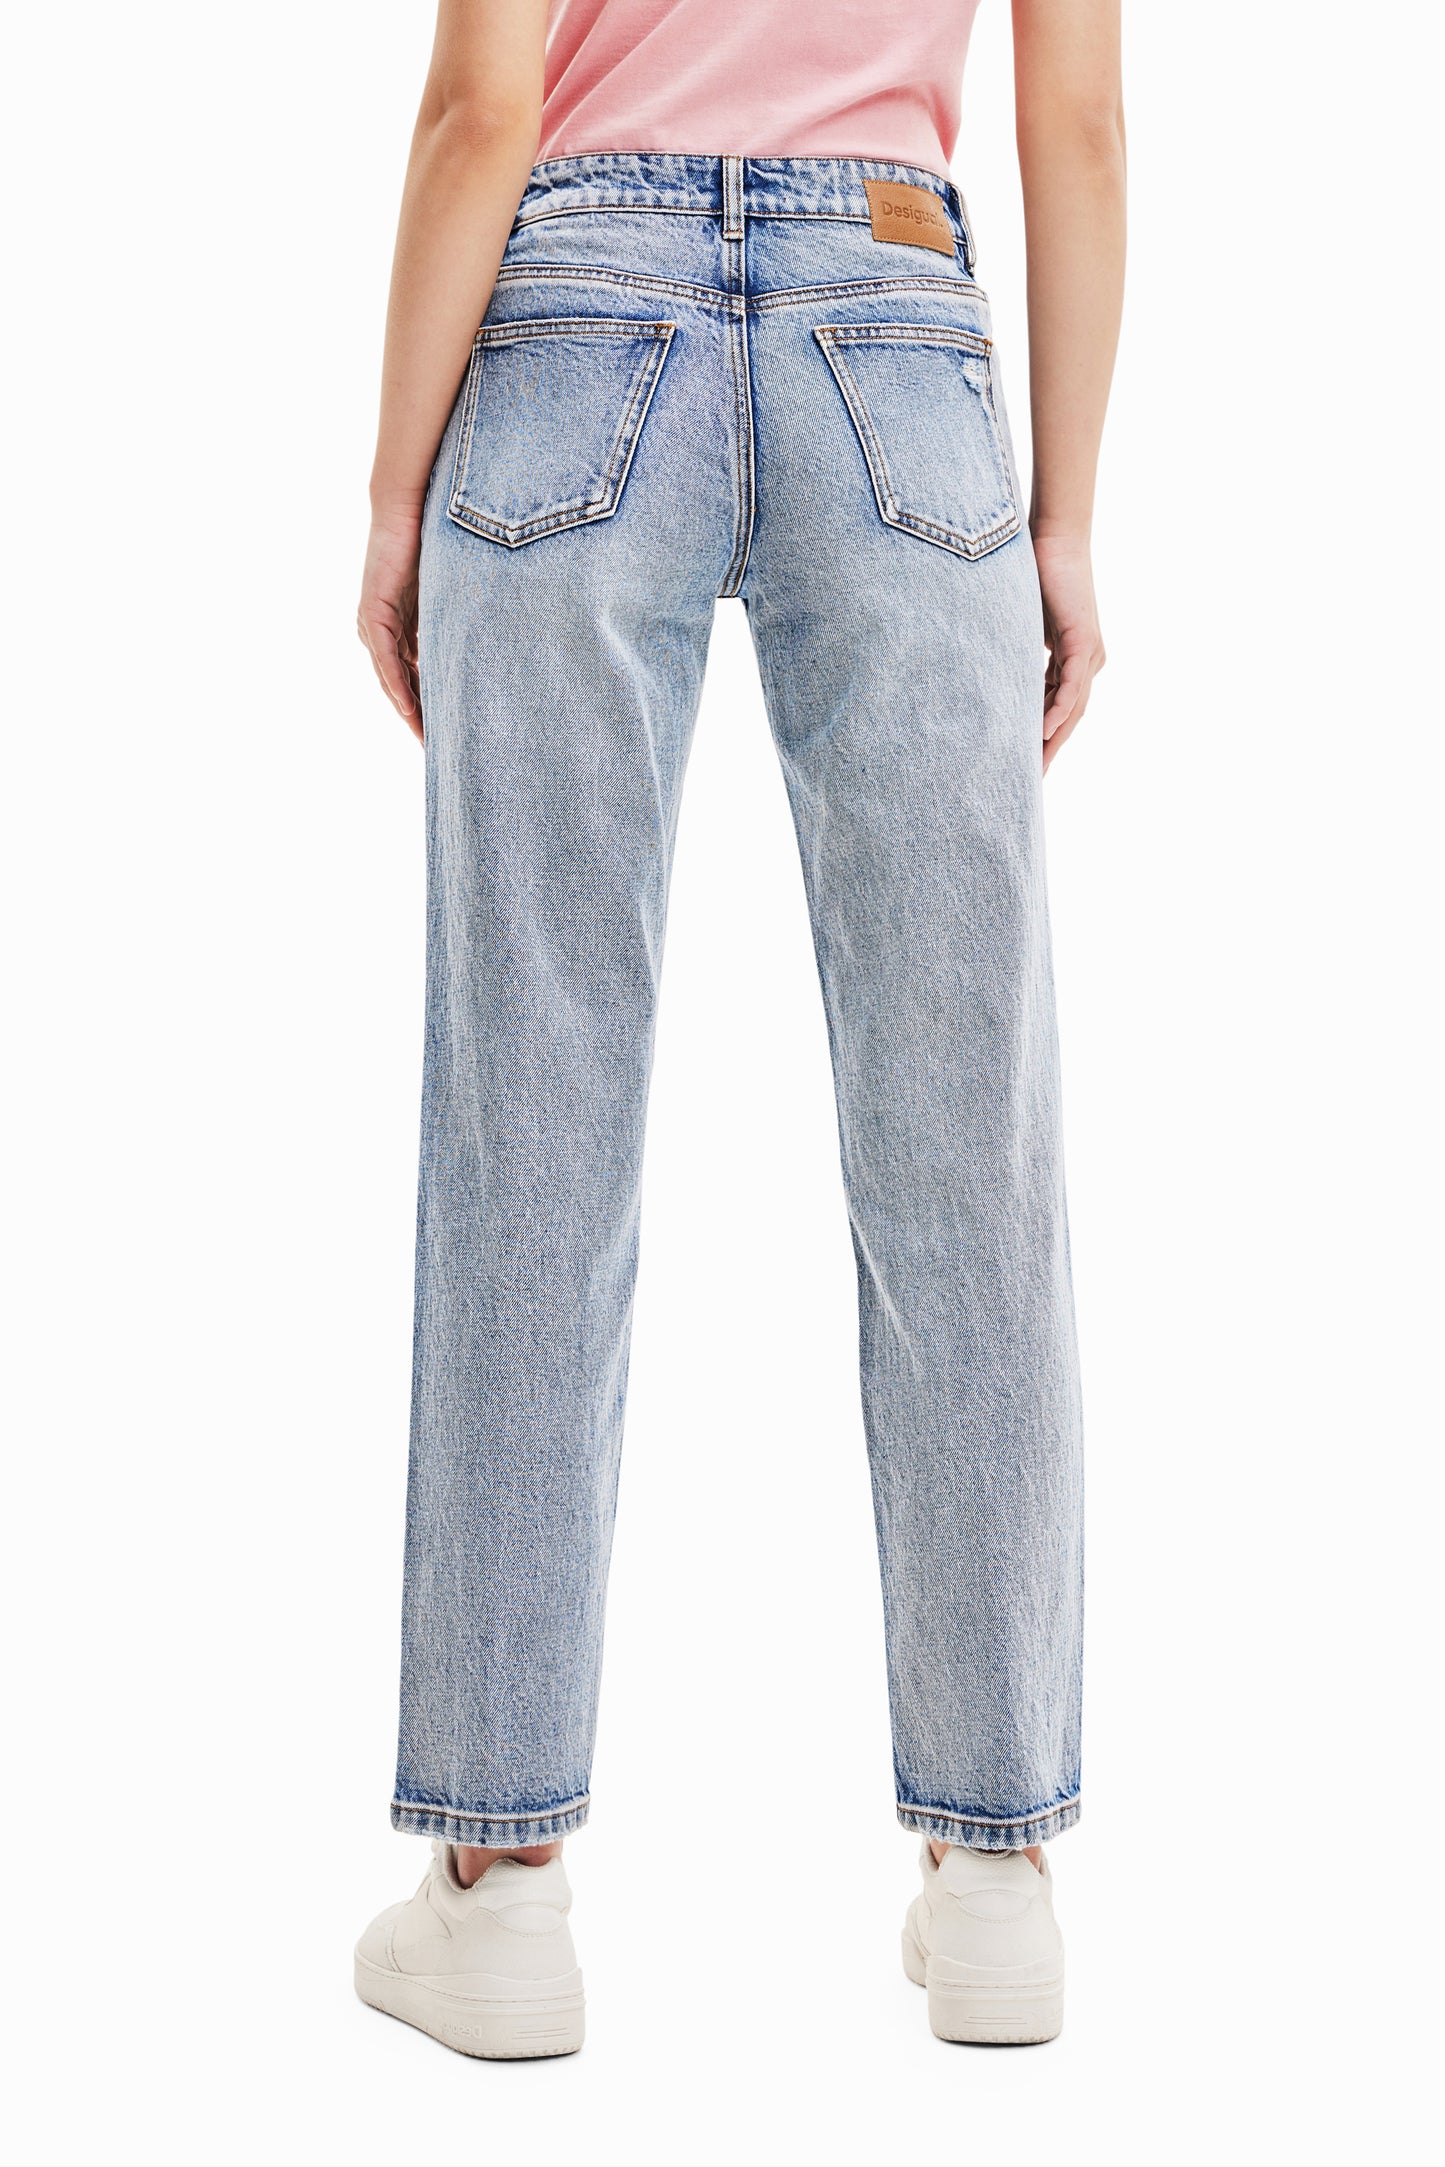 Desigual Straight Appliquéd Jeans 23WWDD06 - Above The Crowd Boutique